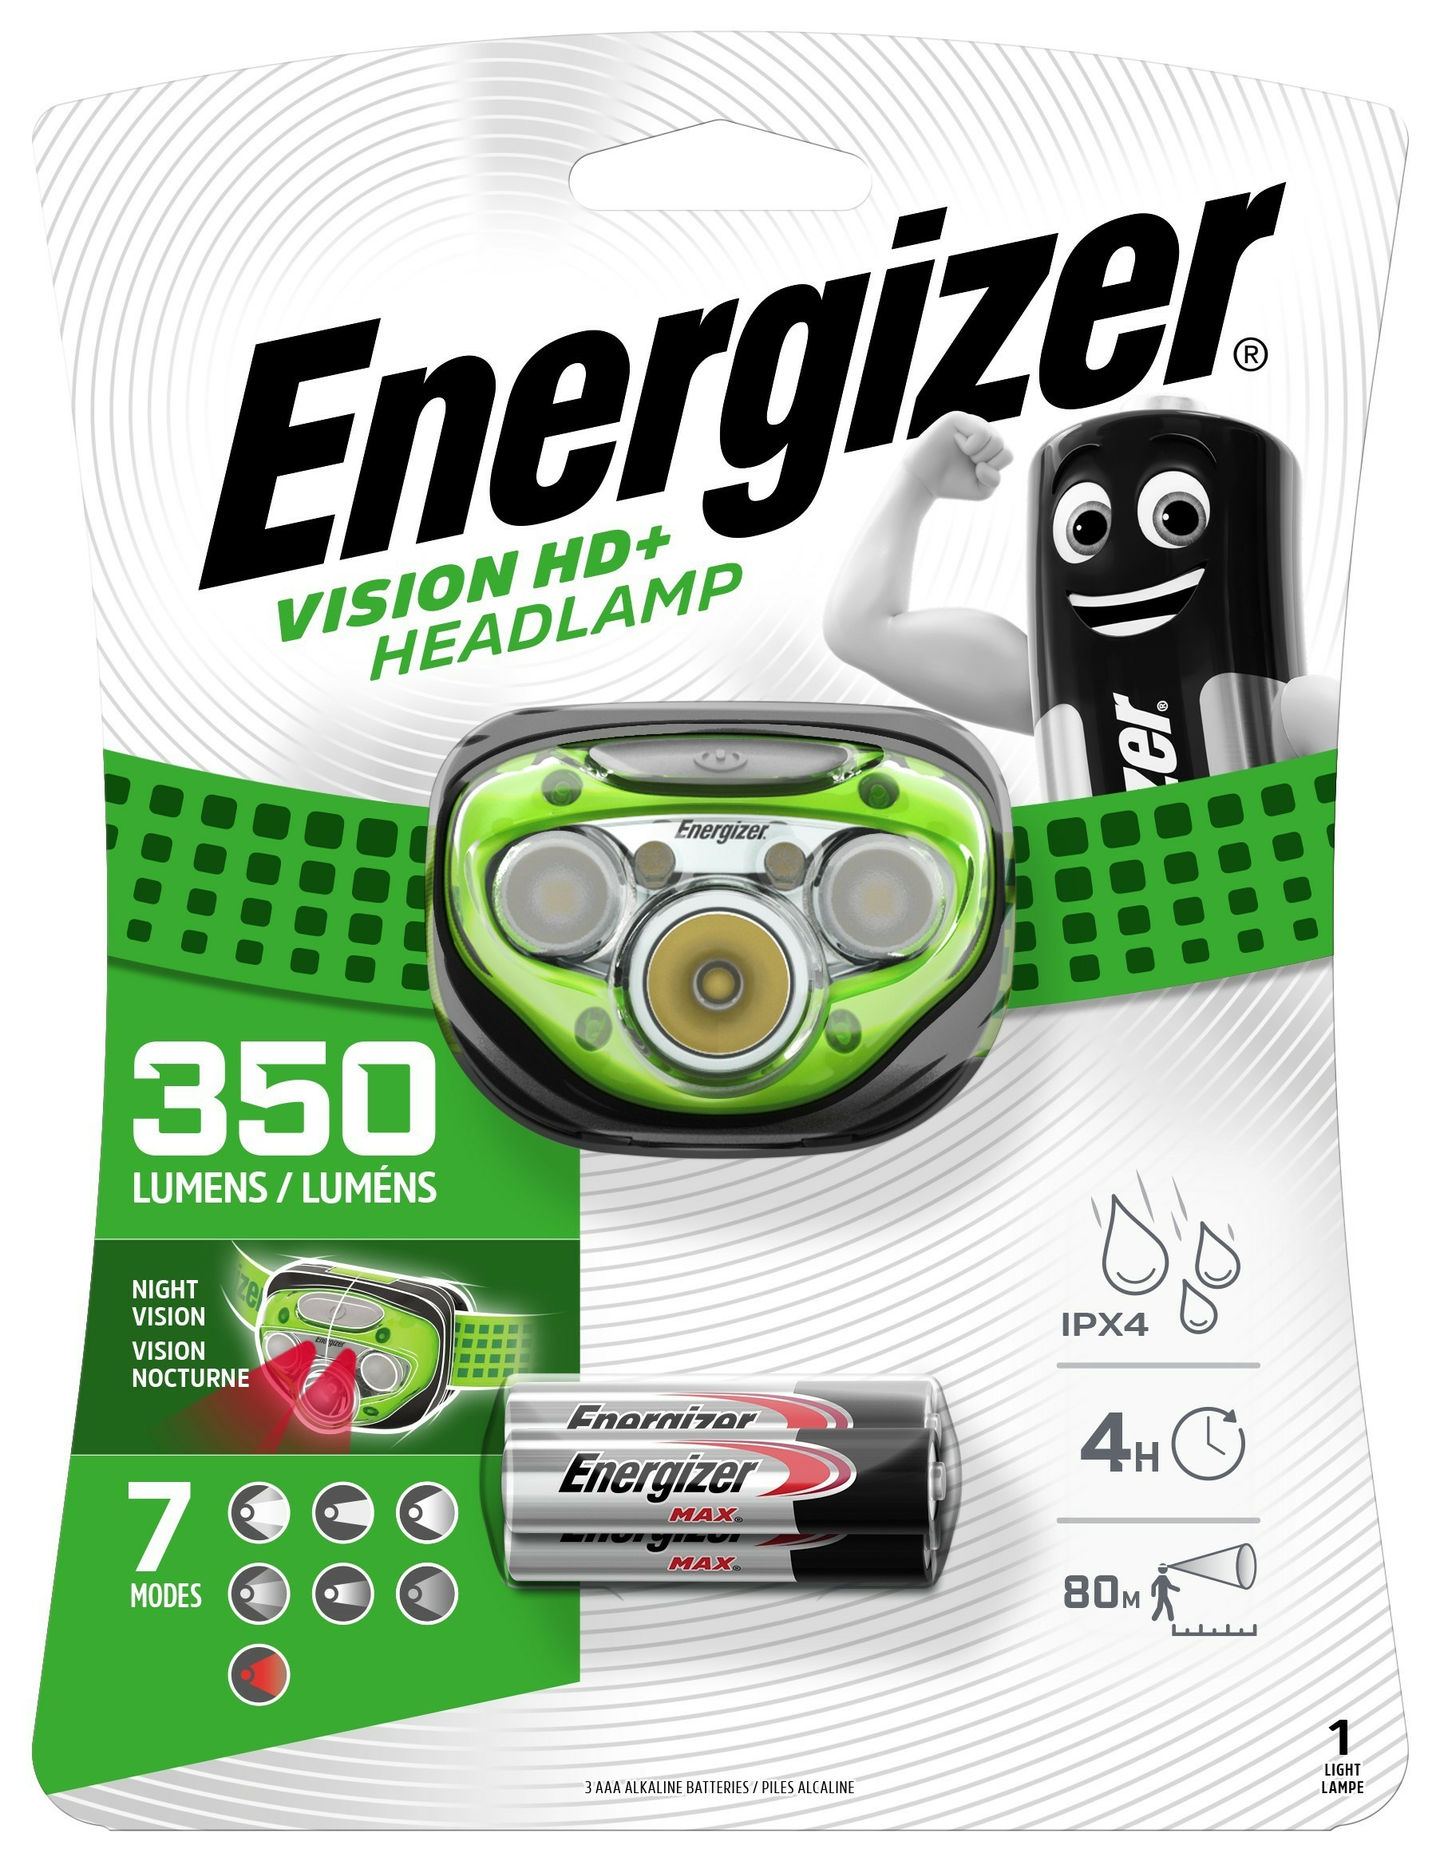 Energizer VisionHD+ otsalamppu